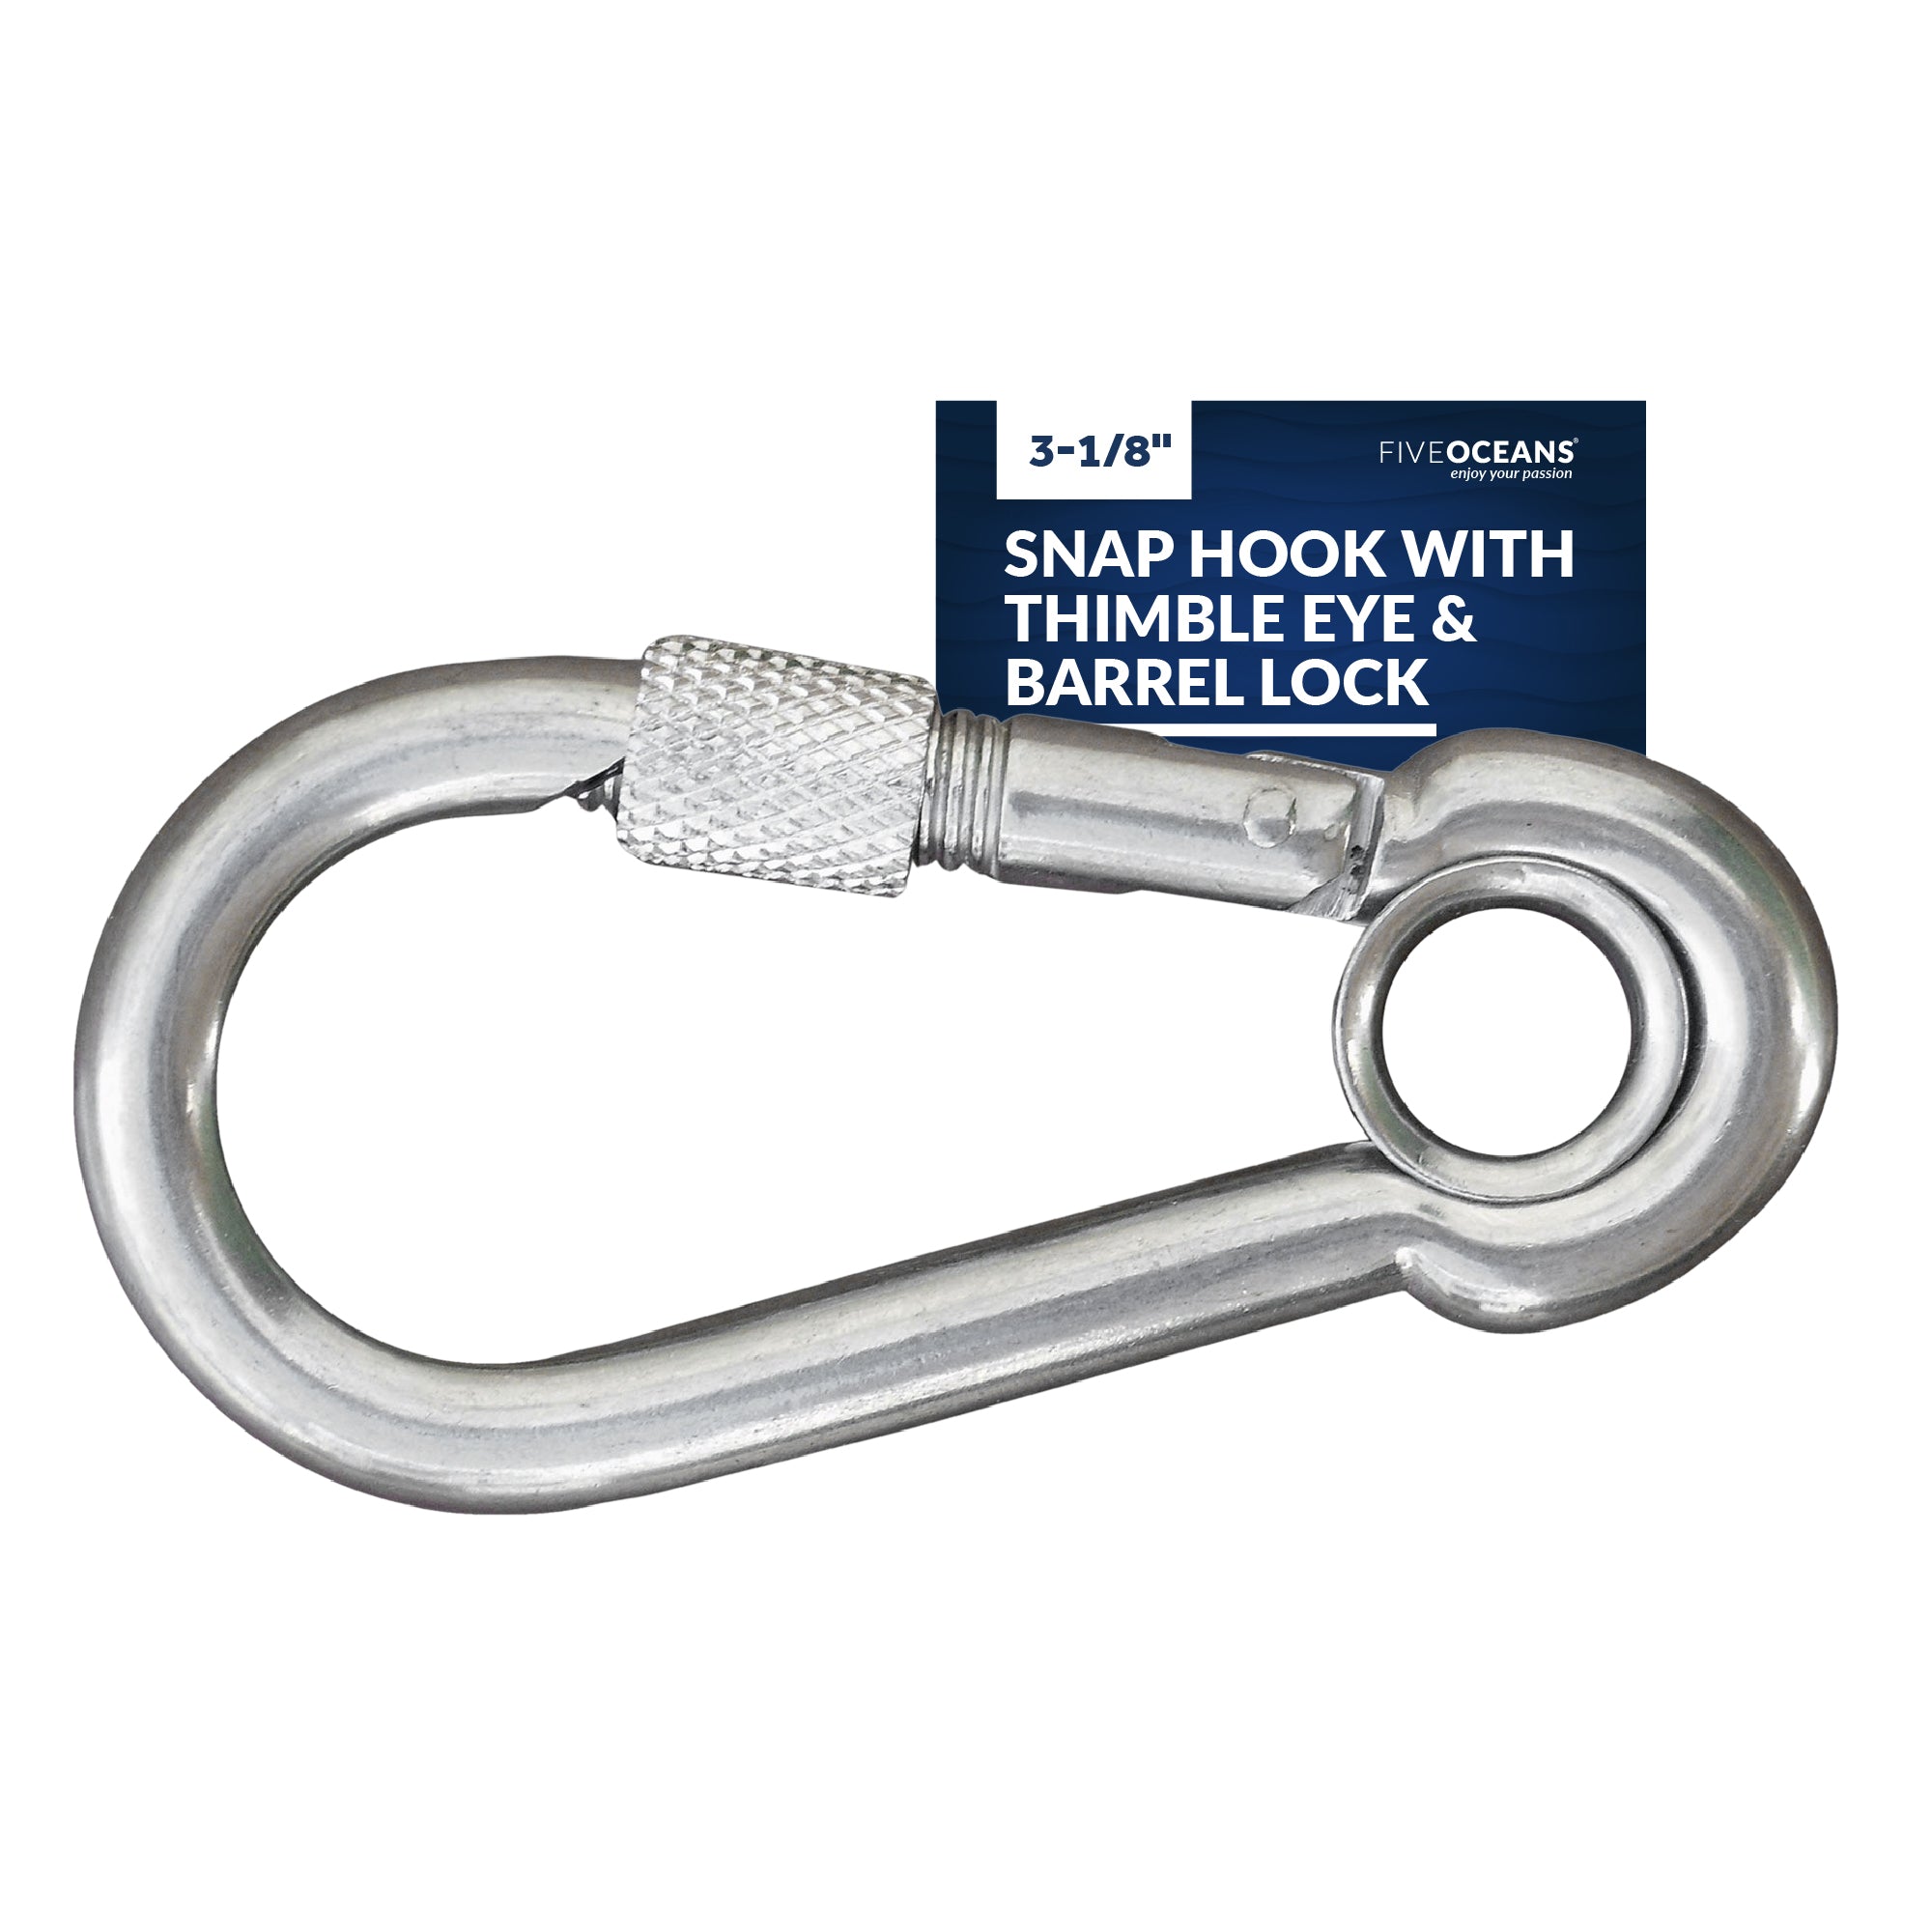 Snap Hook with Thimble Eye & Barrel Lock, 3-1/8" - FO455